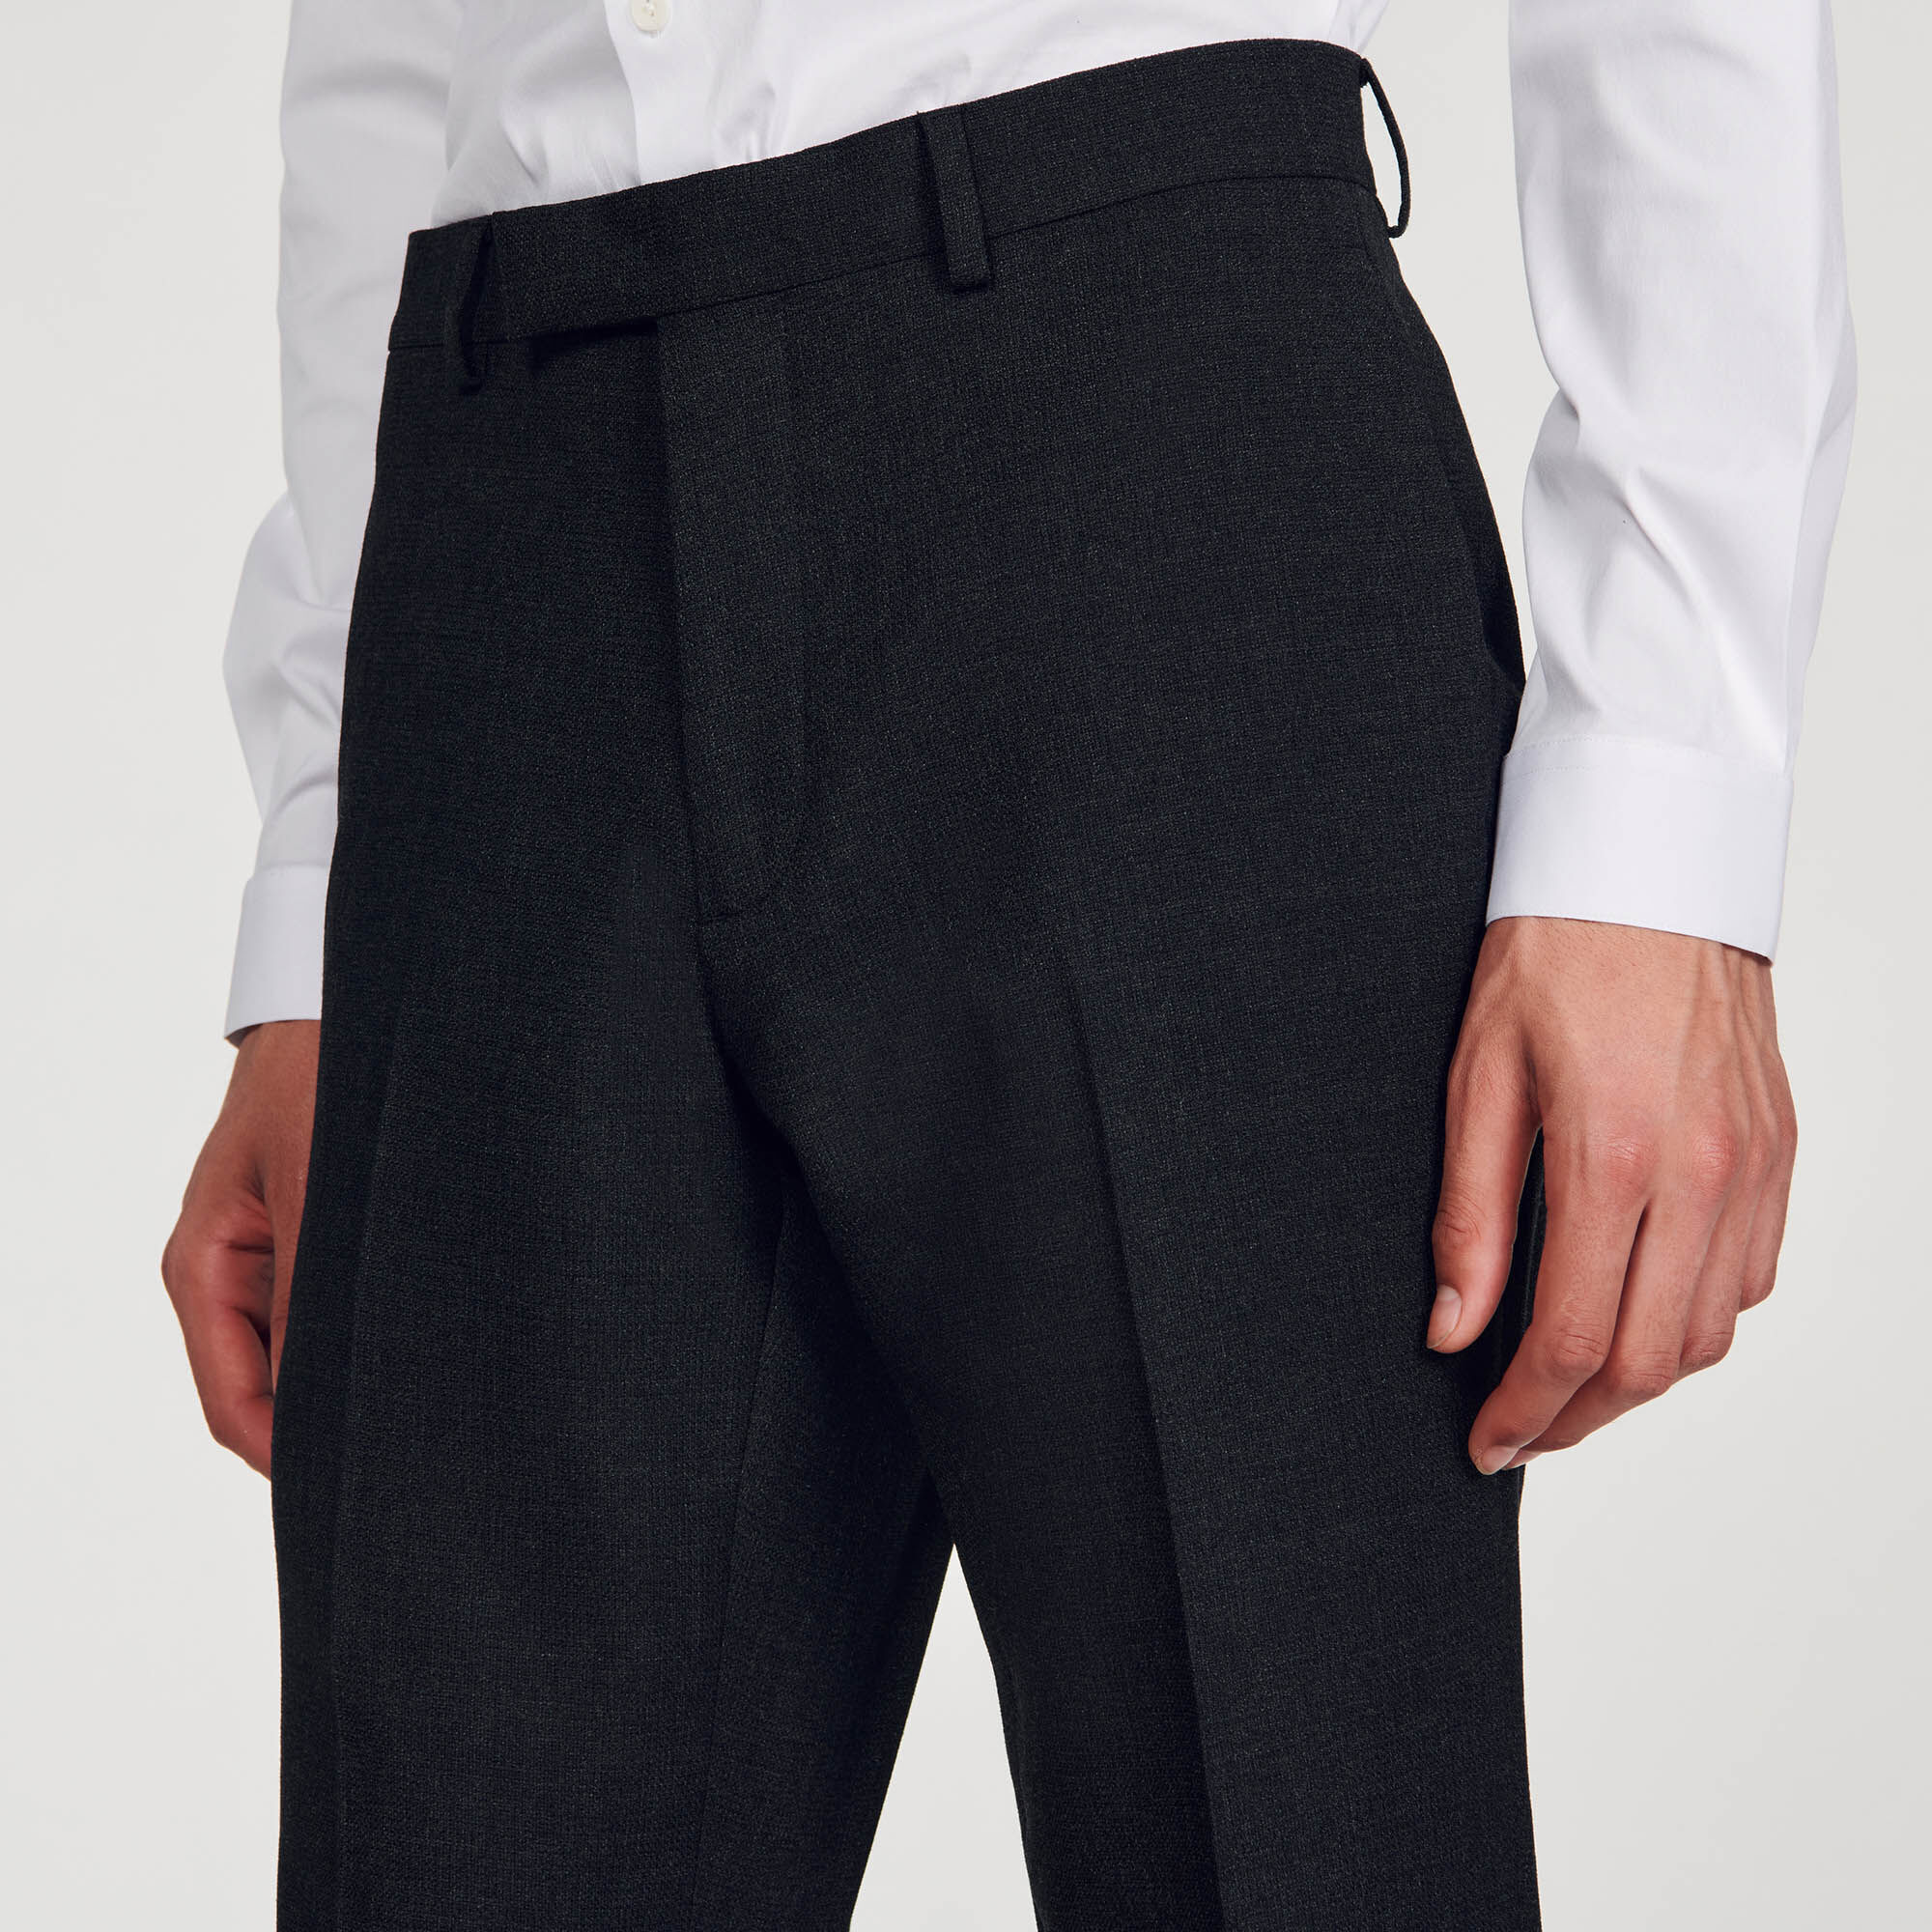 Men Apparels Lounge Trousers Shorts - Buy Men Apparels Lounge Trousers  Shorts online in India